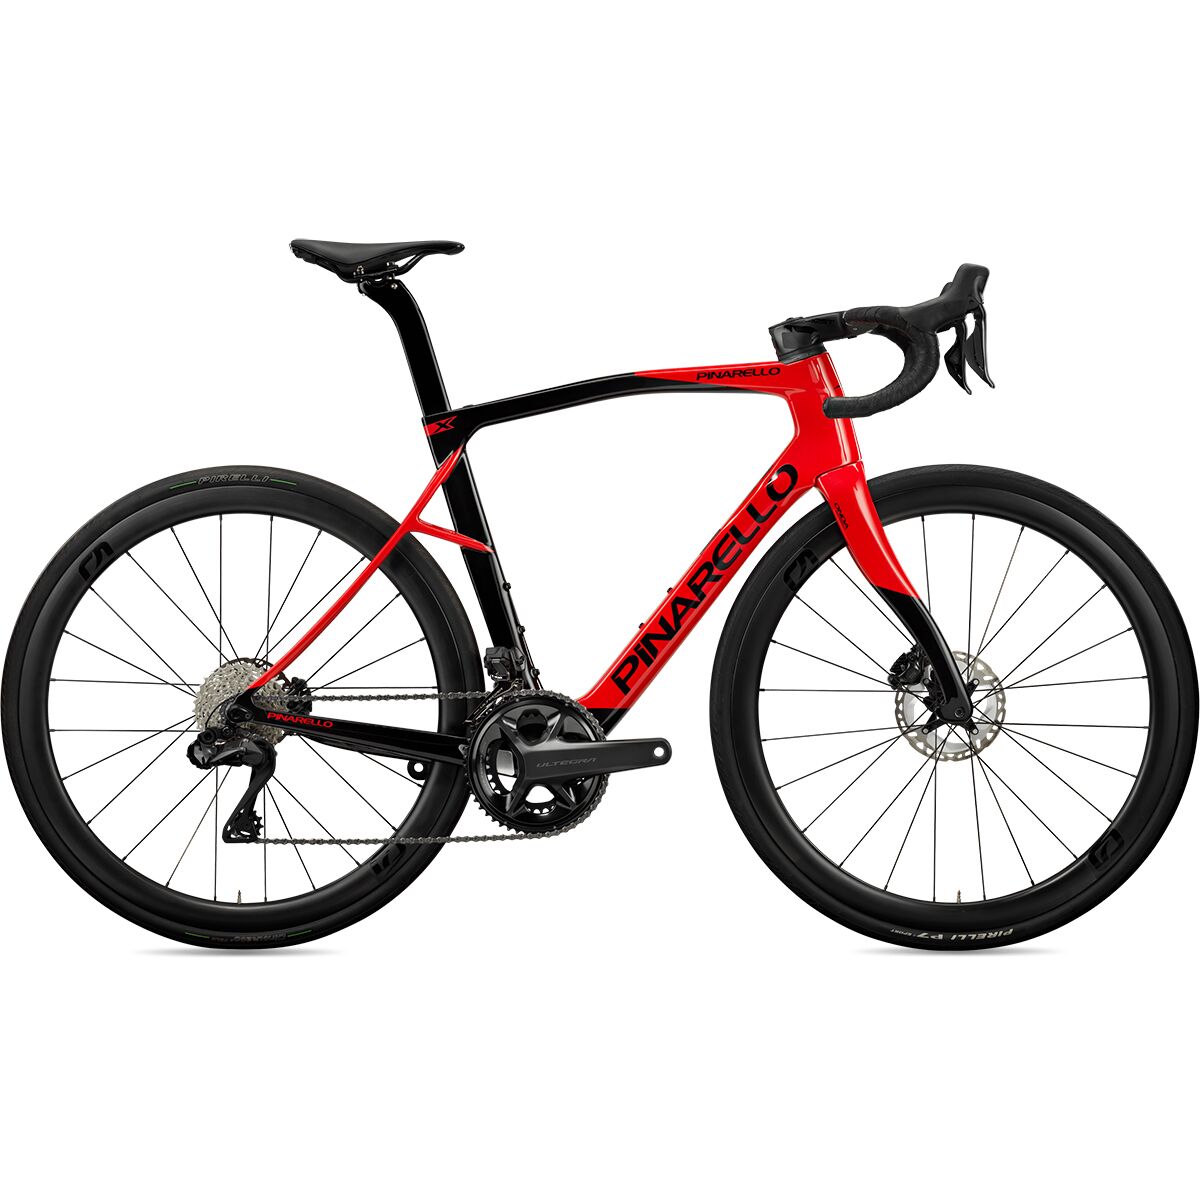 Pinarello X7 Ultegra Di2 Carbon Wheel Road Bike Xpeed Red, 53